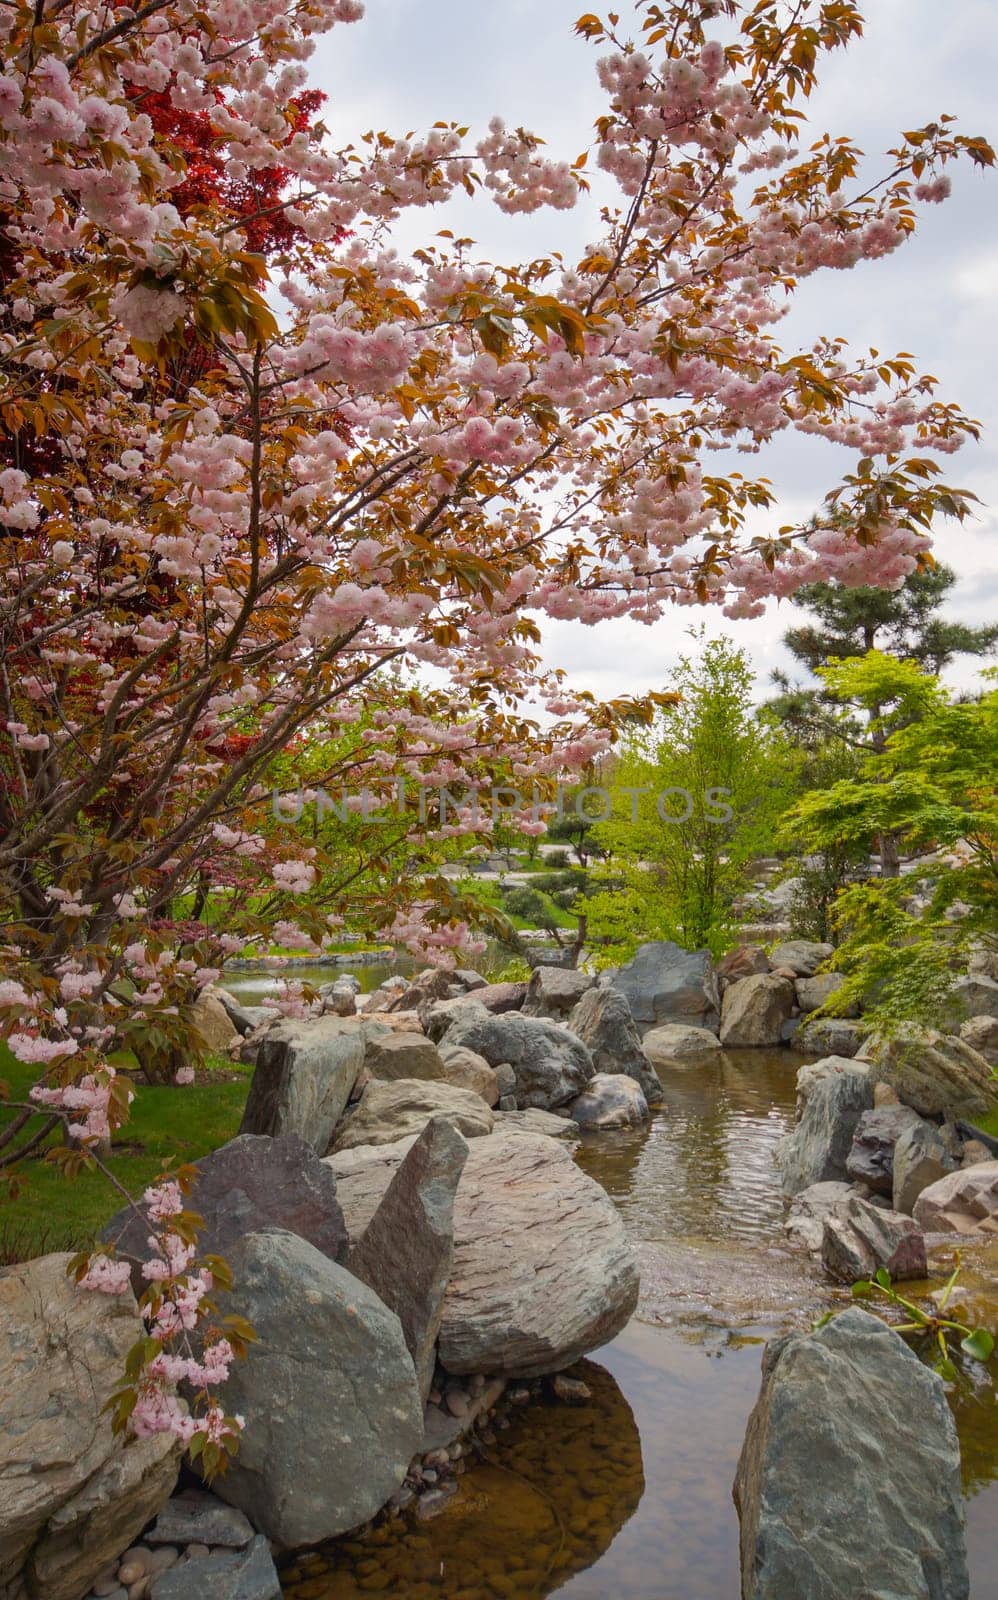 Japanese sakura blossom, spring season image by Ekaterina34